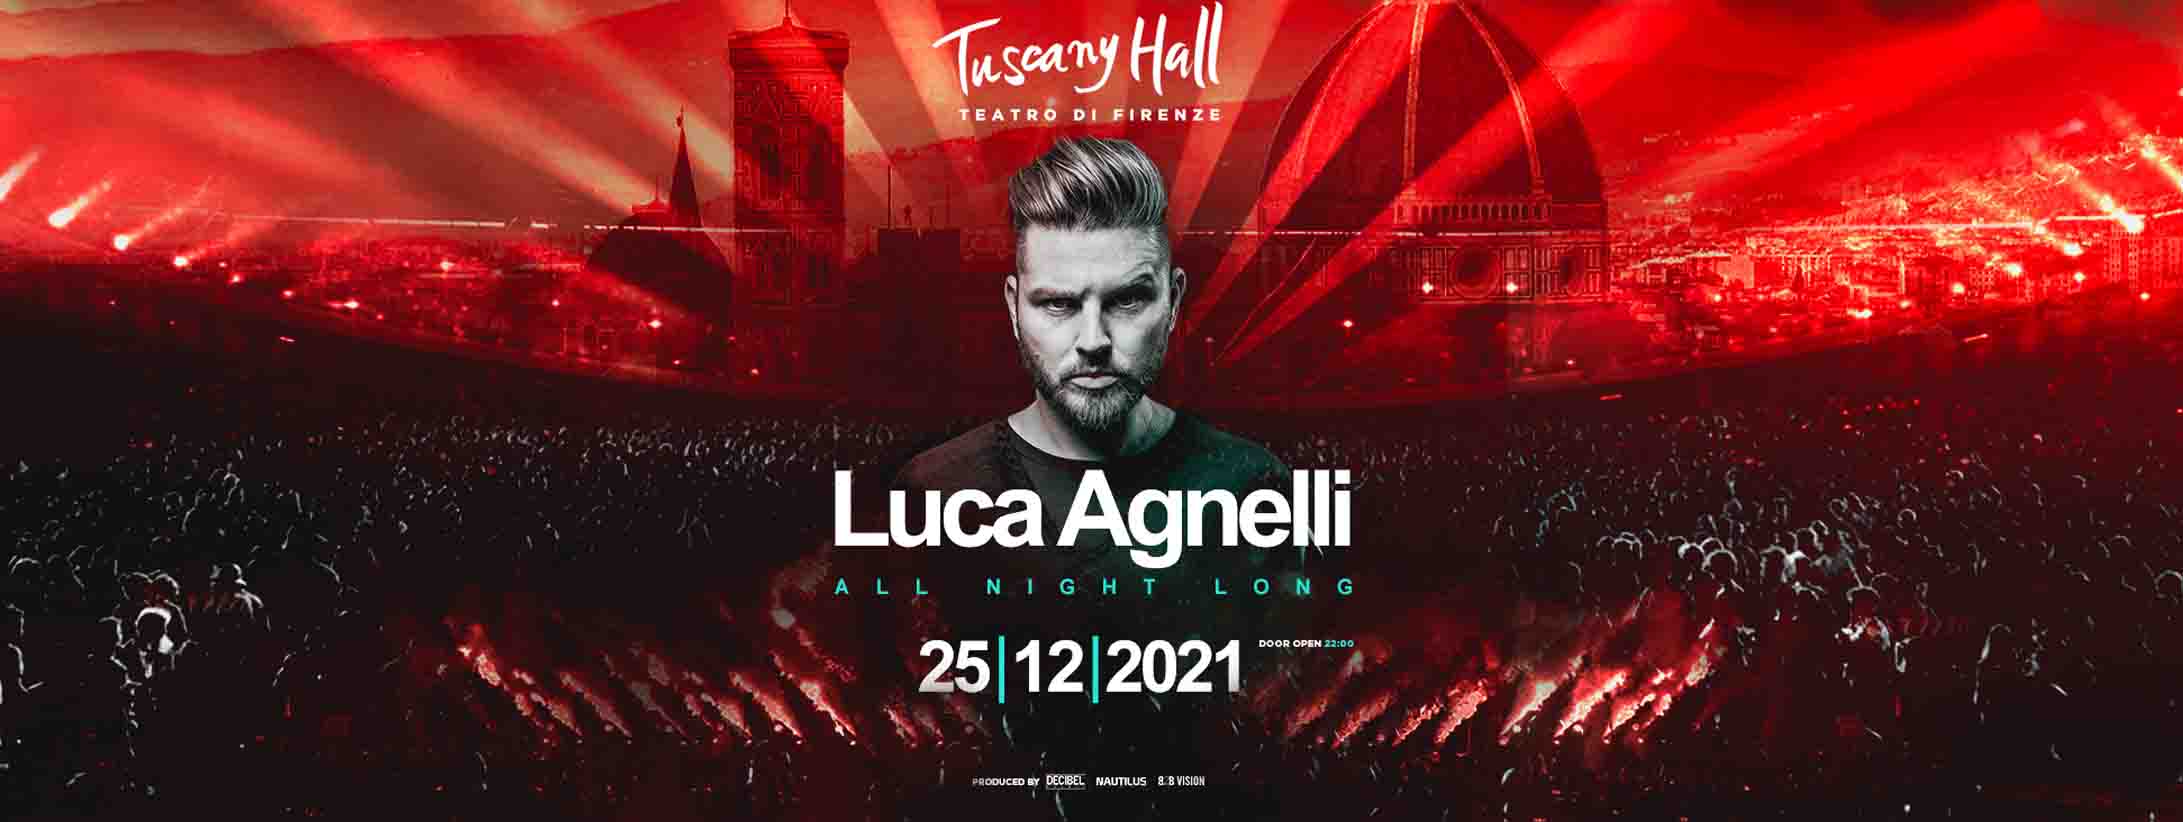 Luca Agnelli Tuscany Hall 25 Dicembre 2021